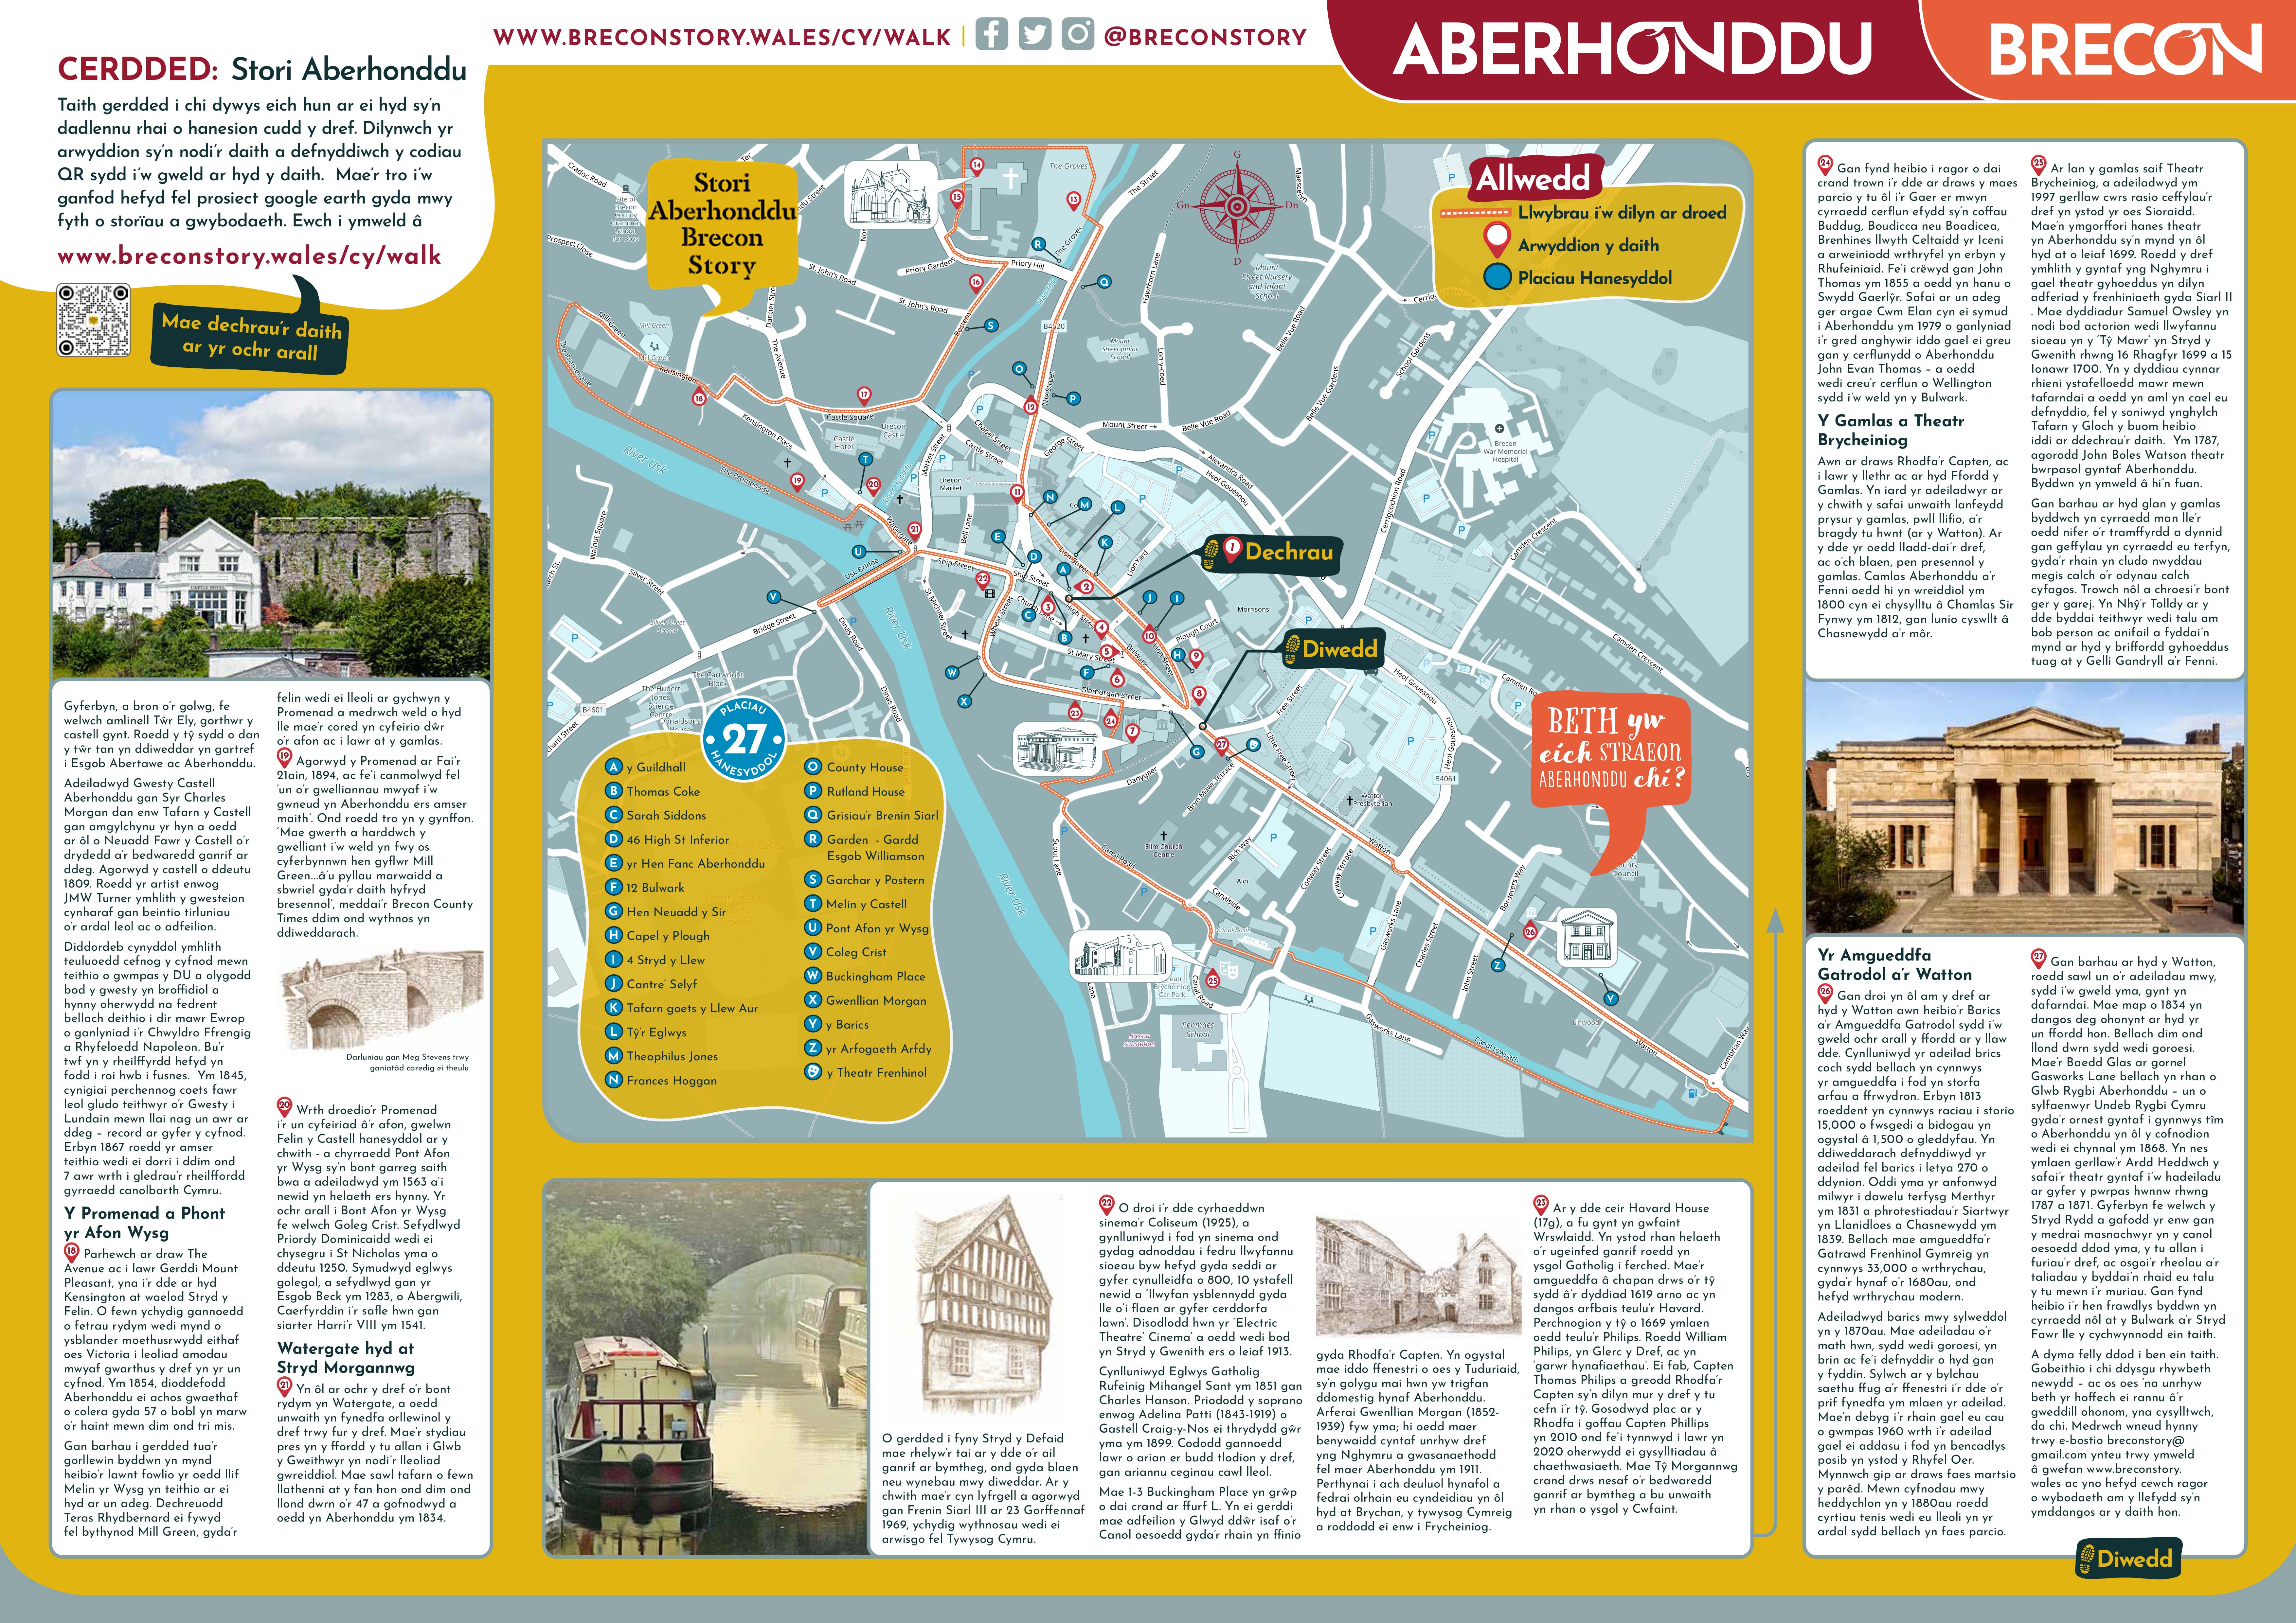 Walk: The Brecon Story heritage walk 